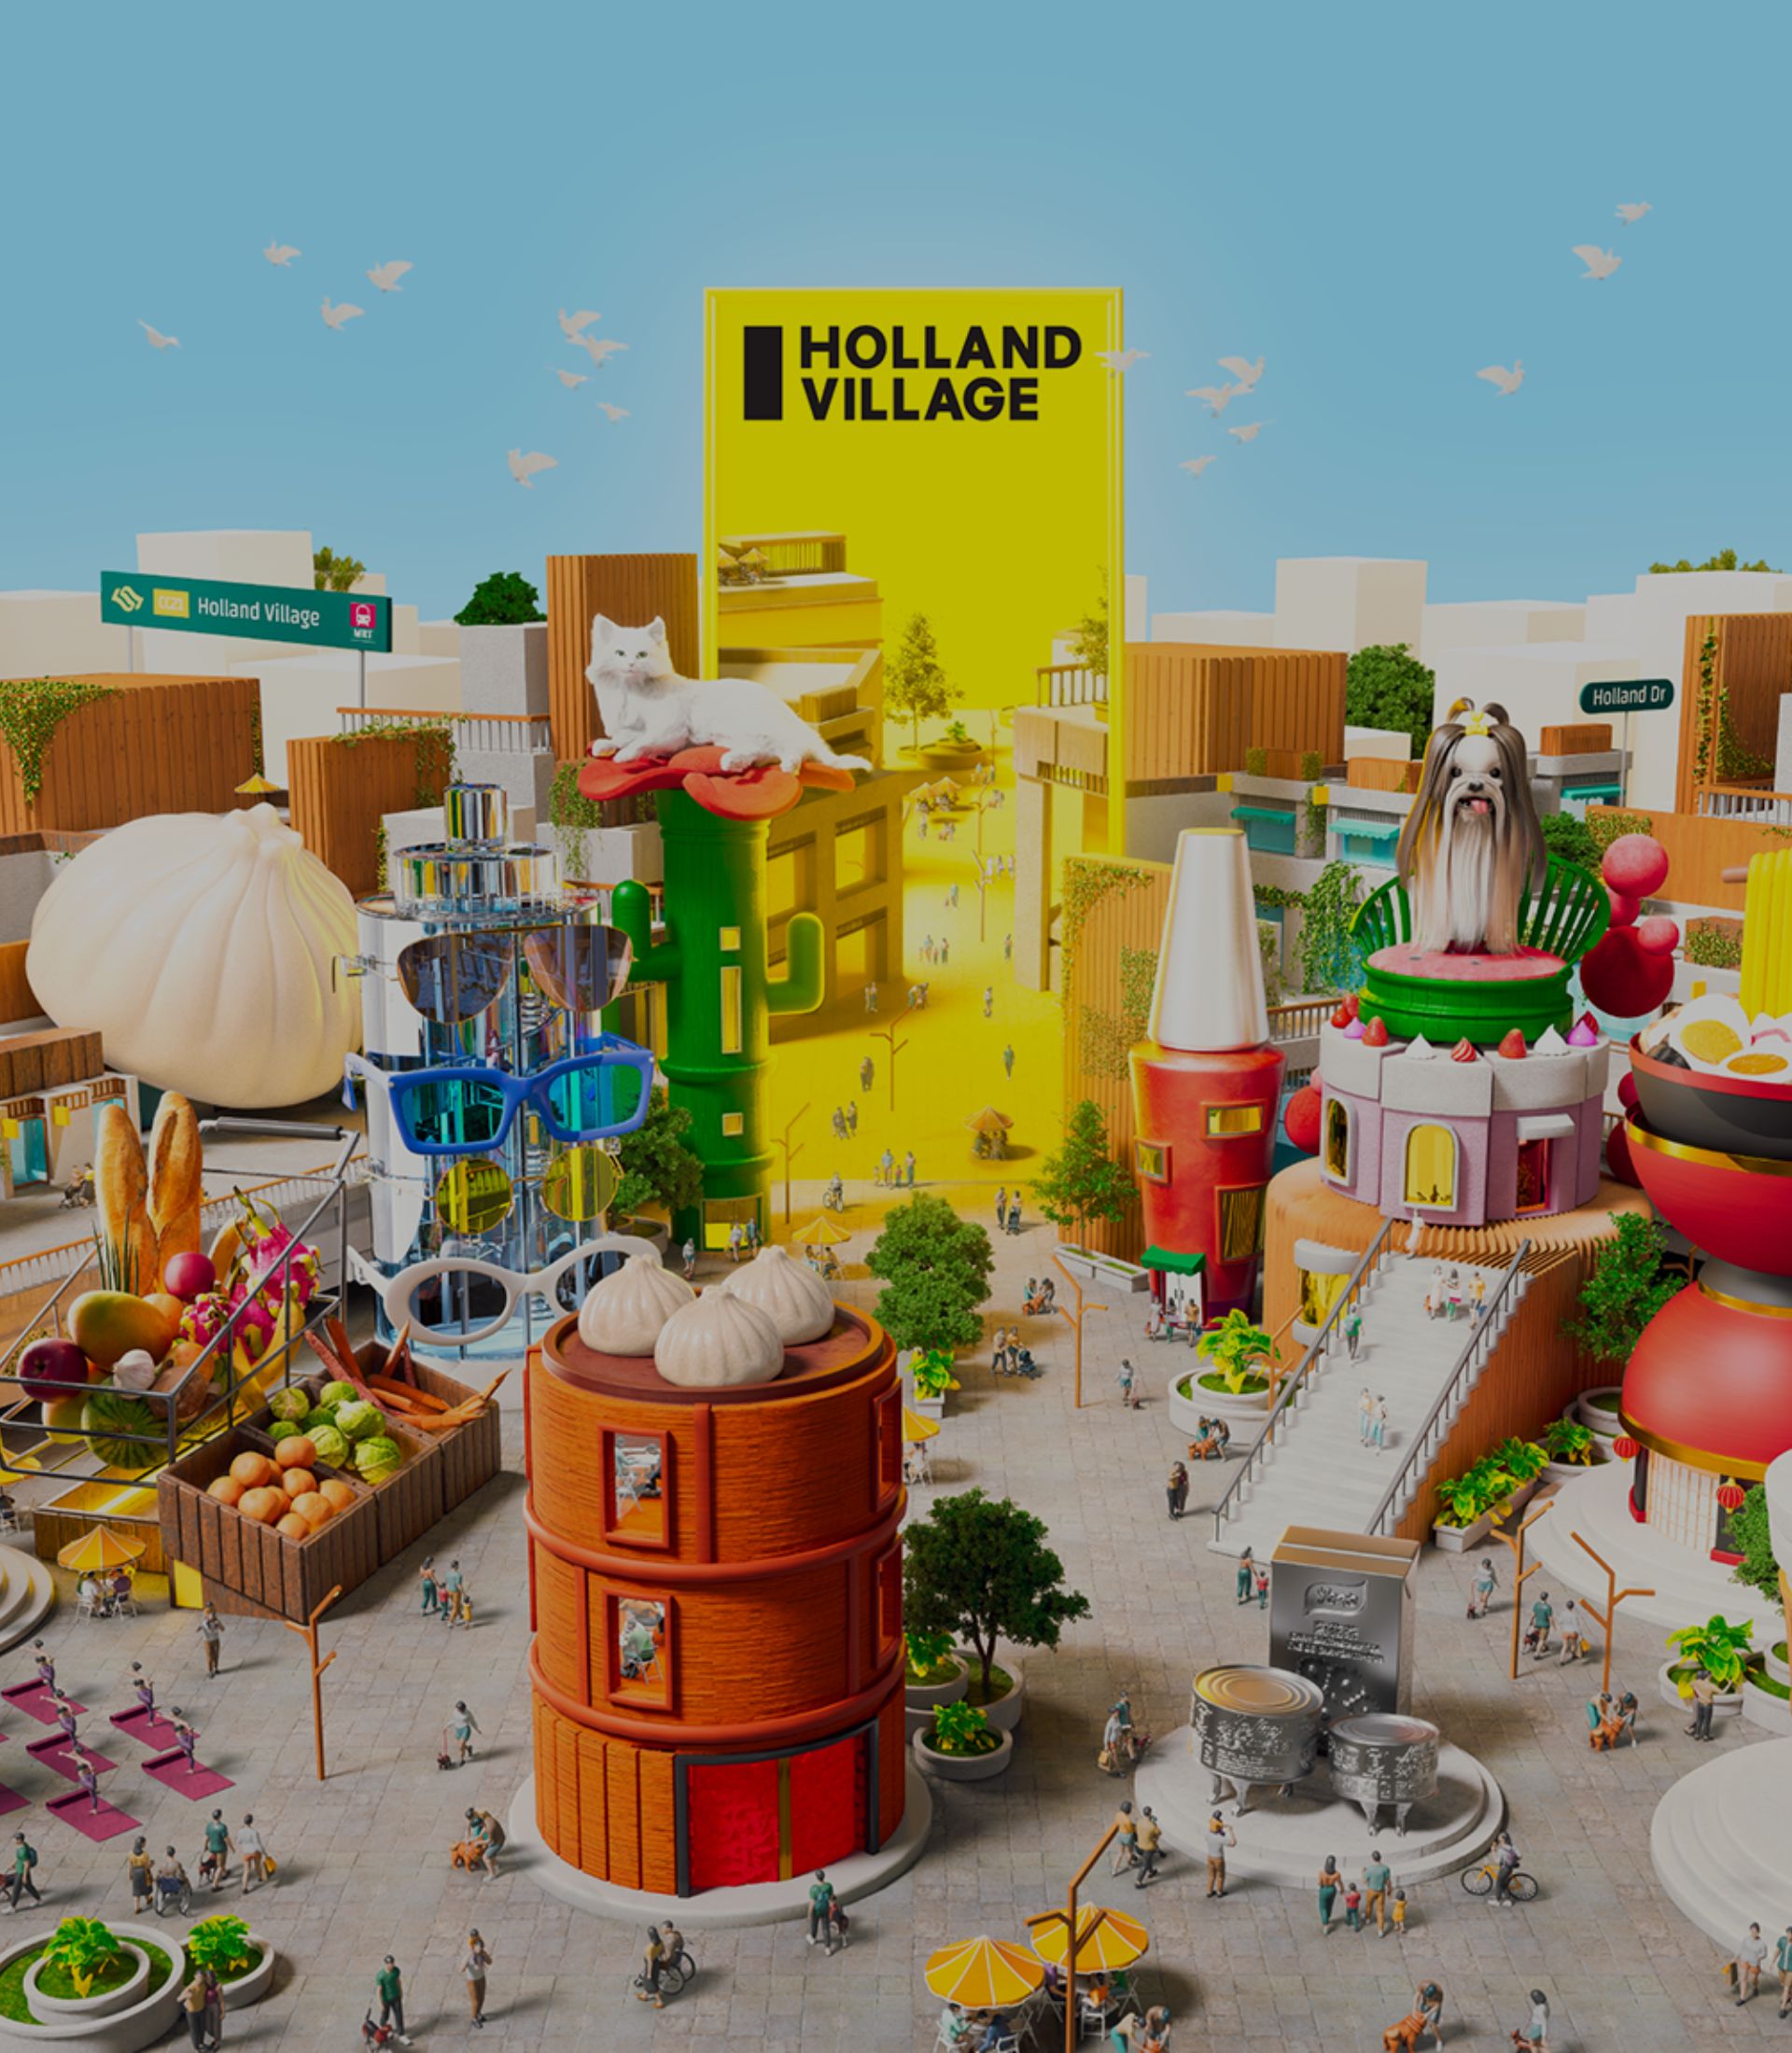 One Holland Village A Glow Up At Holland V Thumbnail 